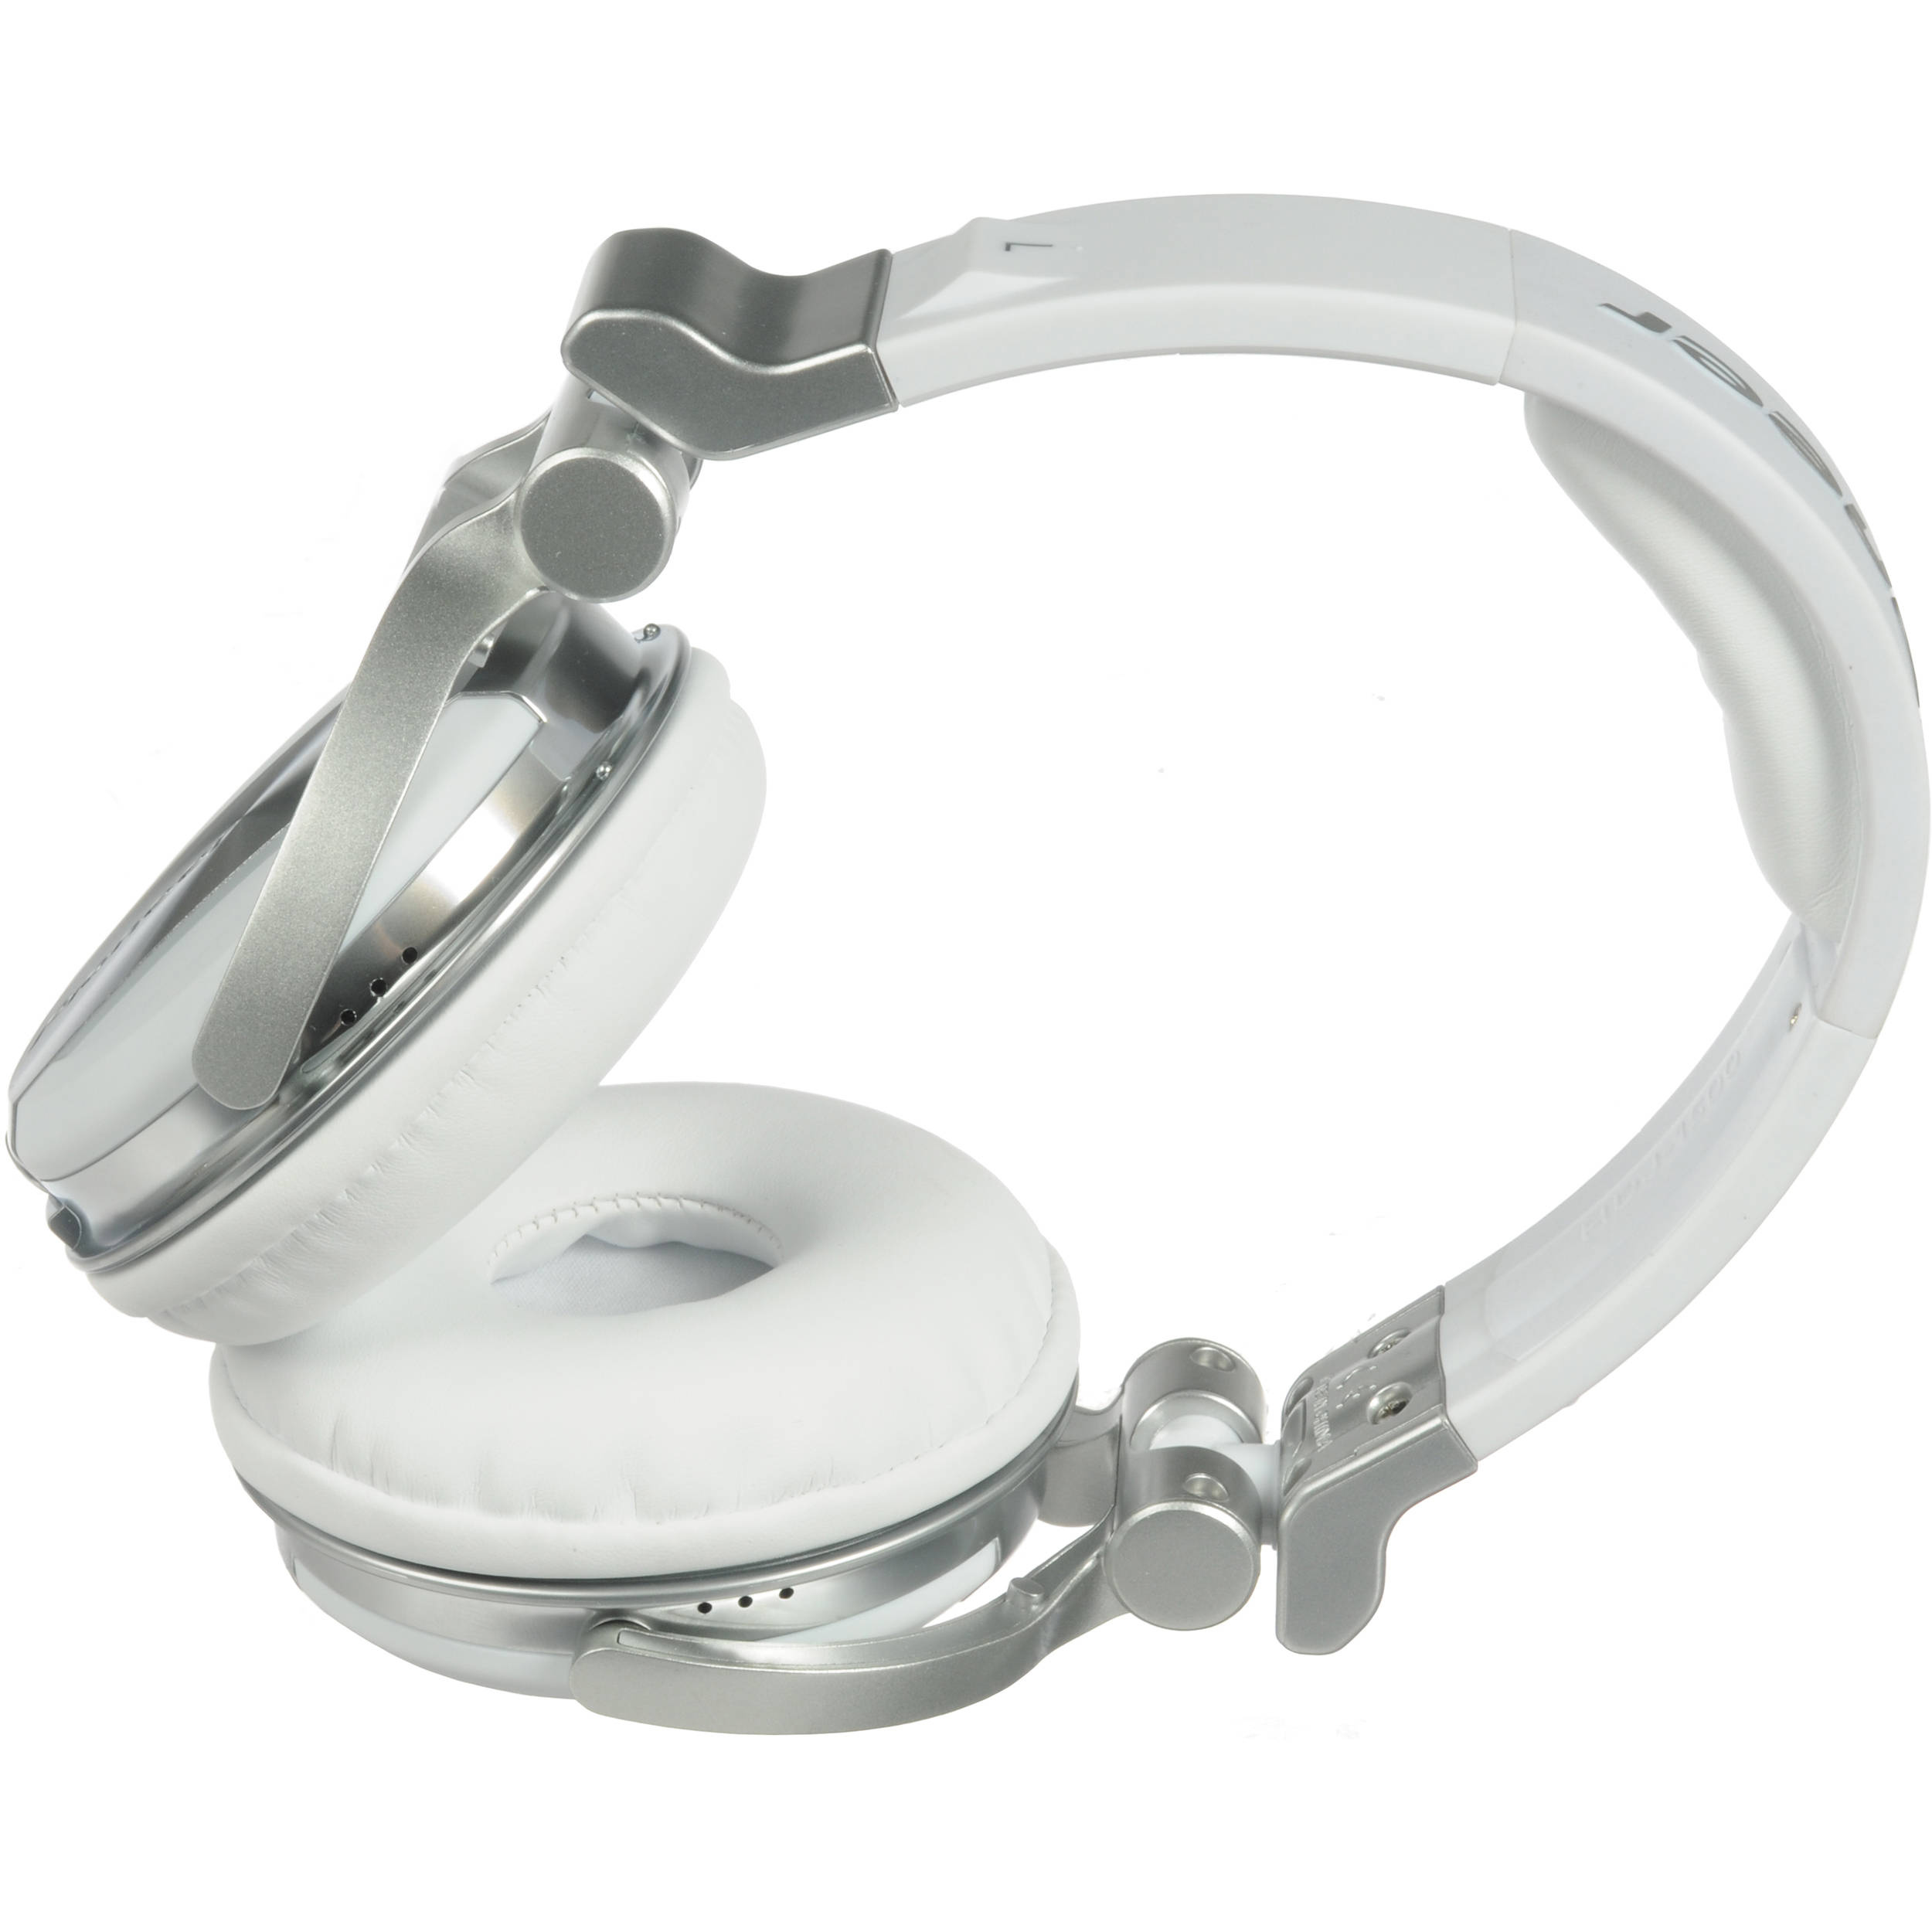 Pioneer HDJ-1500 Professional DJ Headphones (White)